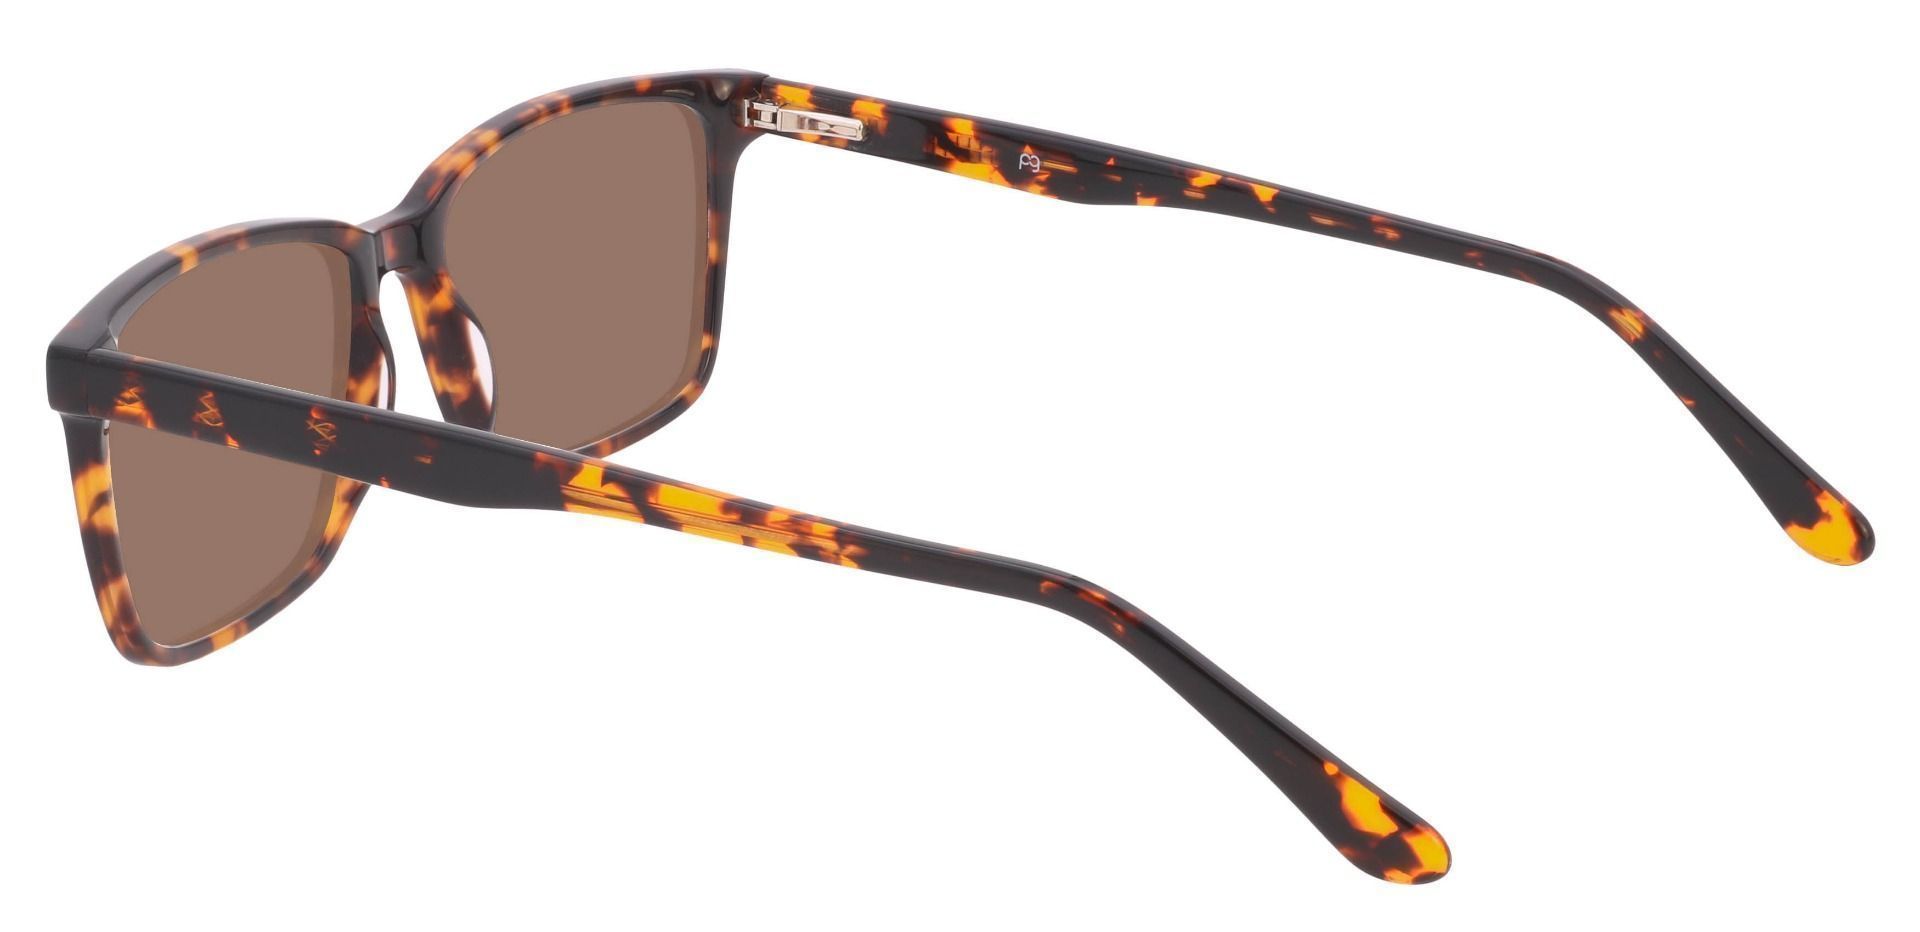 Venice Rectangle Reading Sunglasses - Tortoise Frame With Brown Lenses